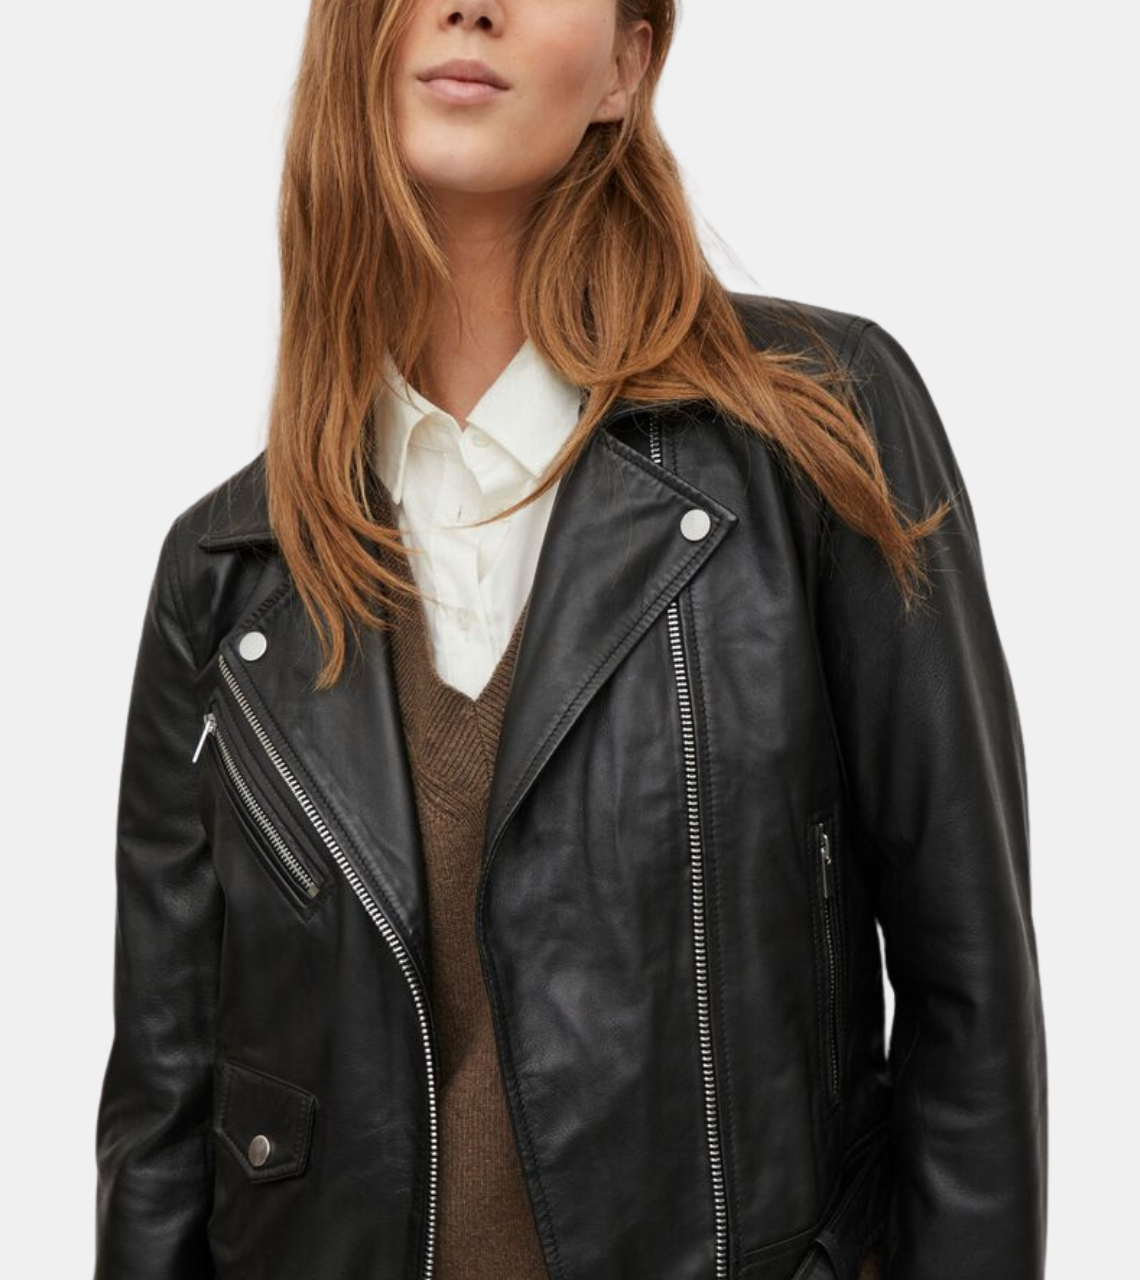  Lovella Black Biker Leather jacket For Women's